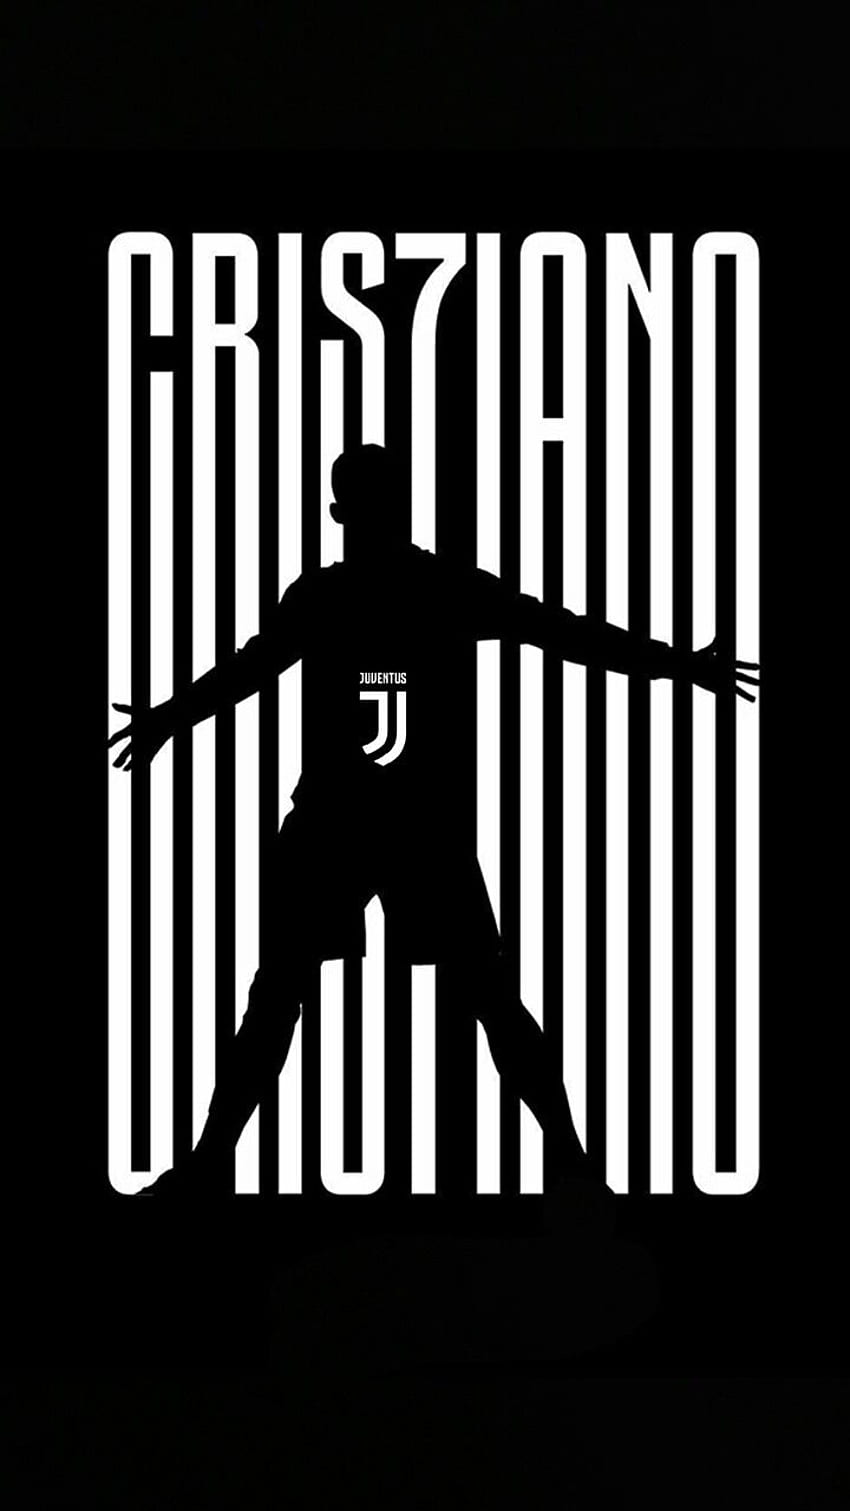 CR7 Logo Png Cristiano Ronaldo Image Png